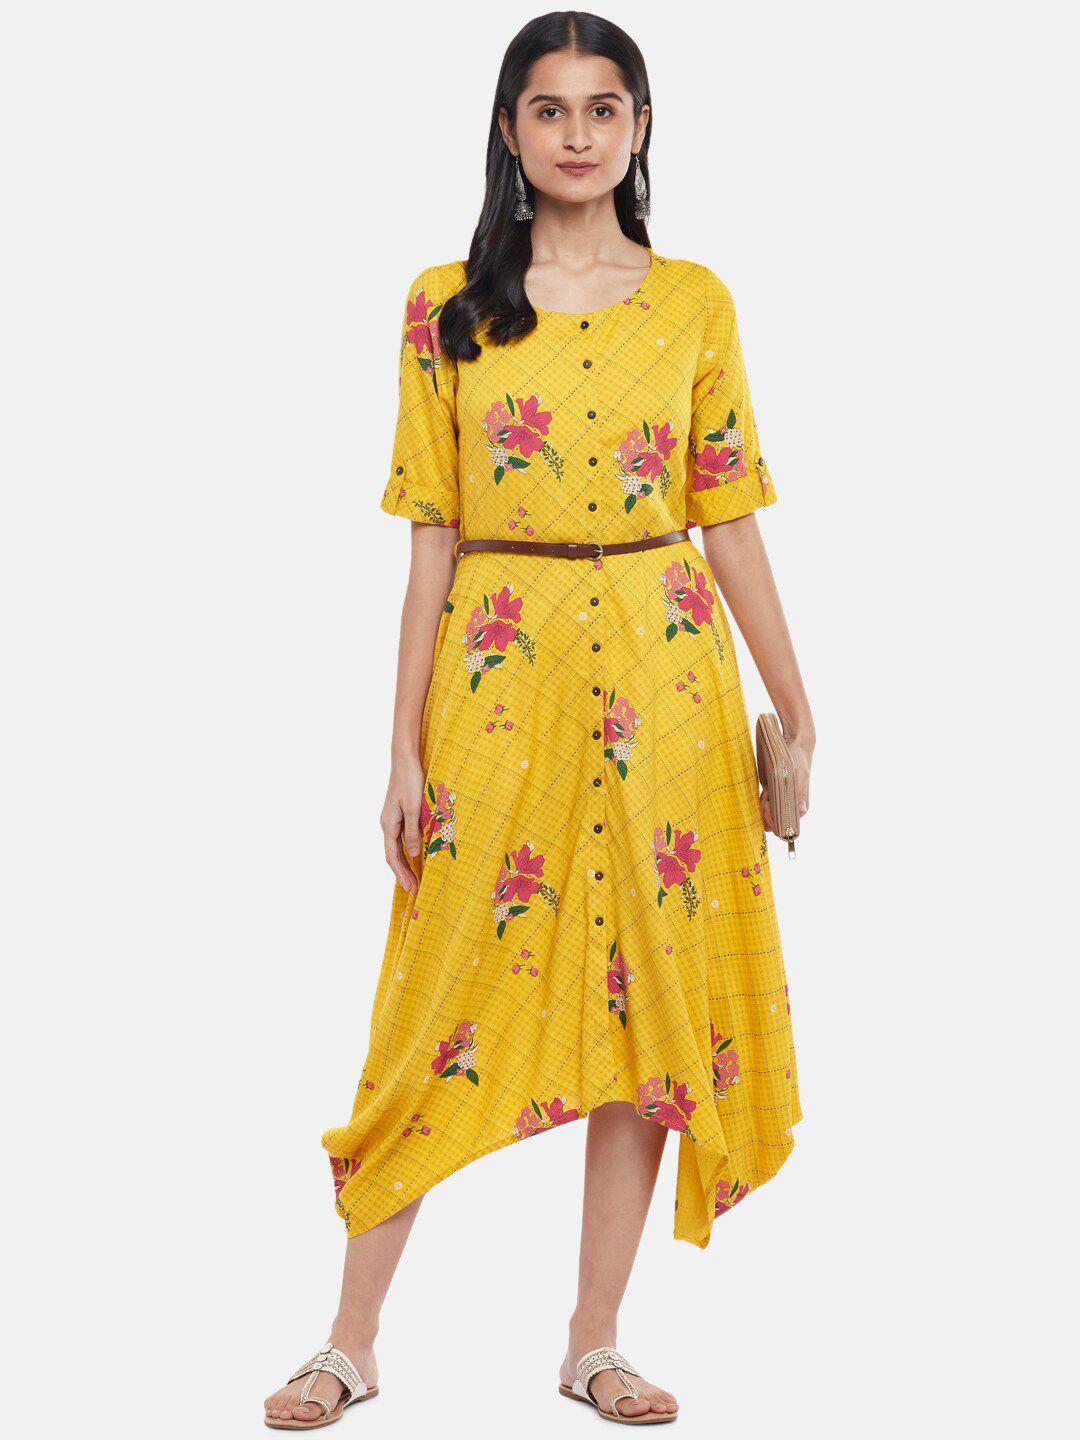 akkriti-by-pantaloons-yellow-&-red-floral-midi-dress